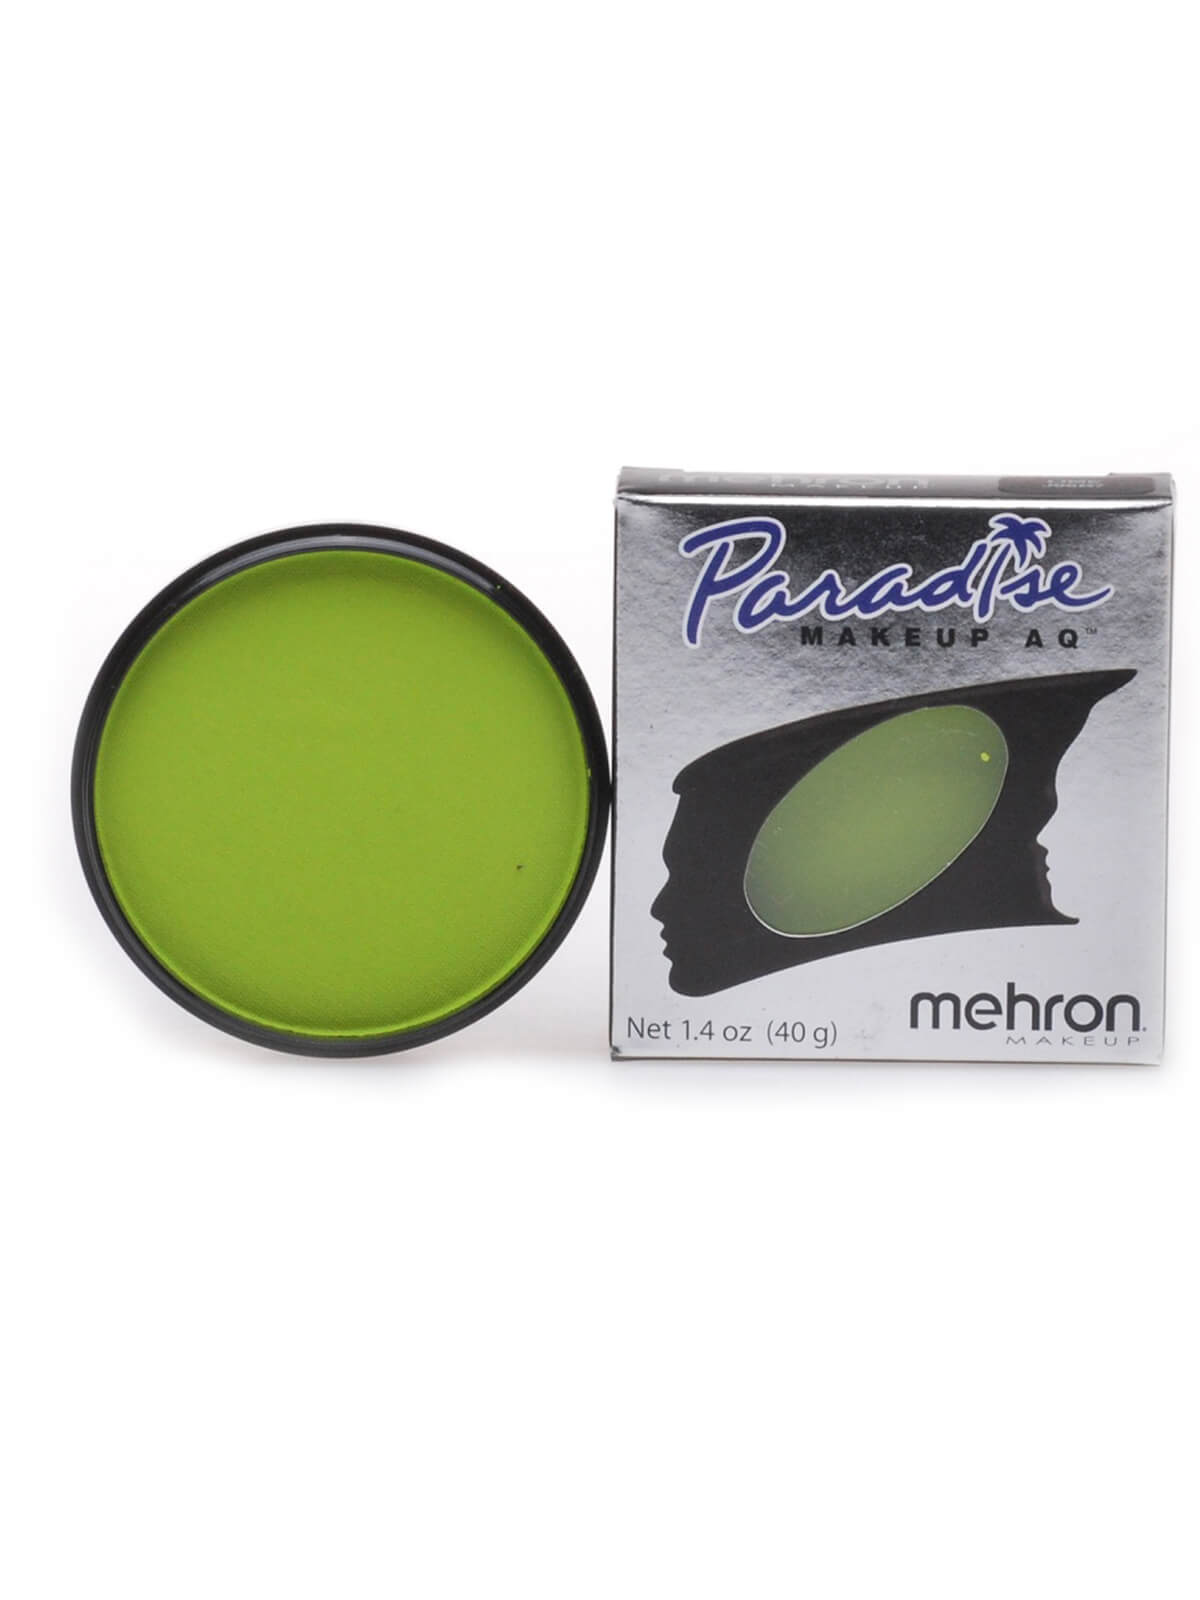 Mehron Paradise Makeup AQ - Tropical - Lime